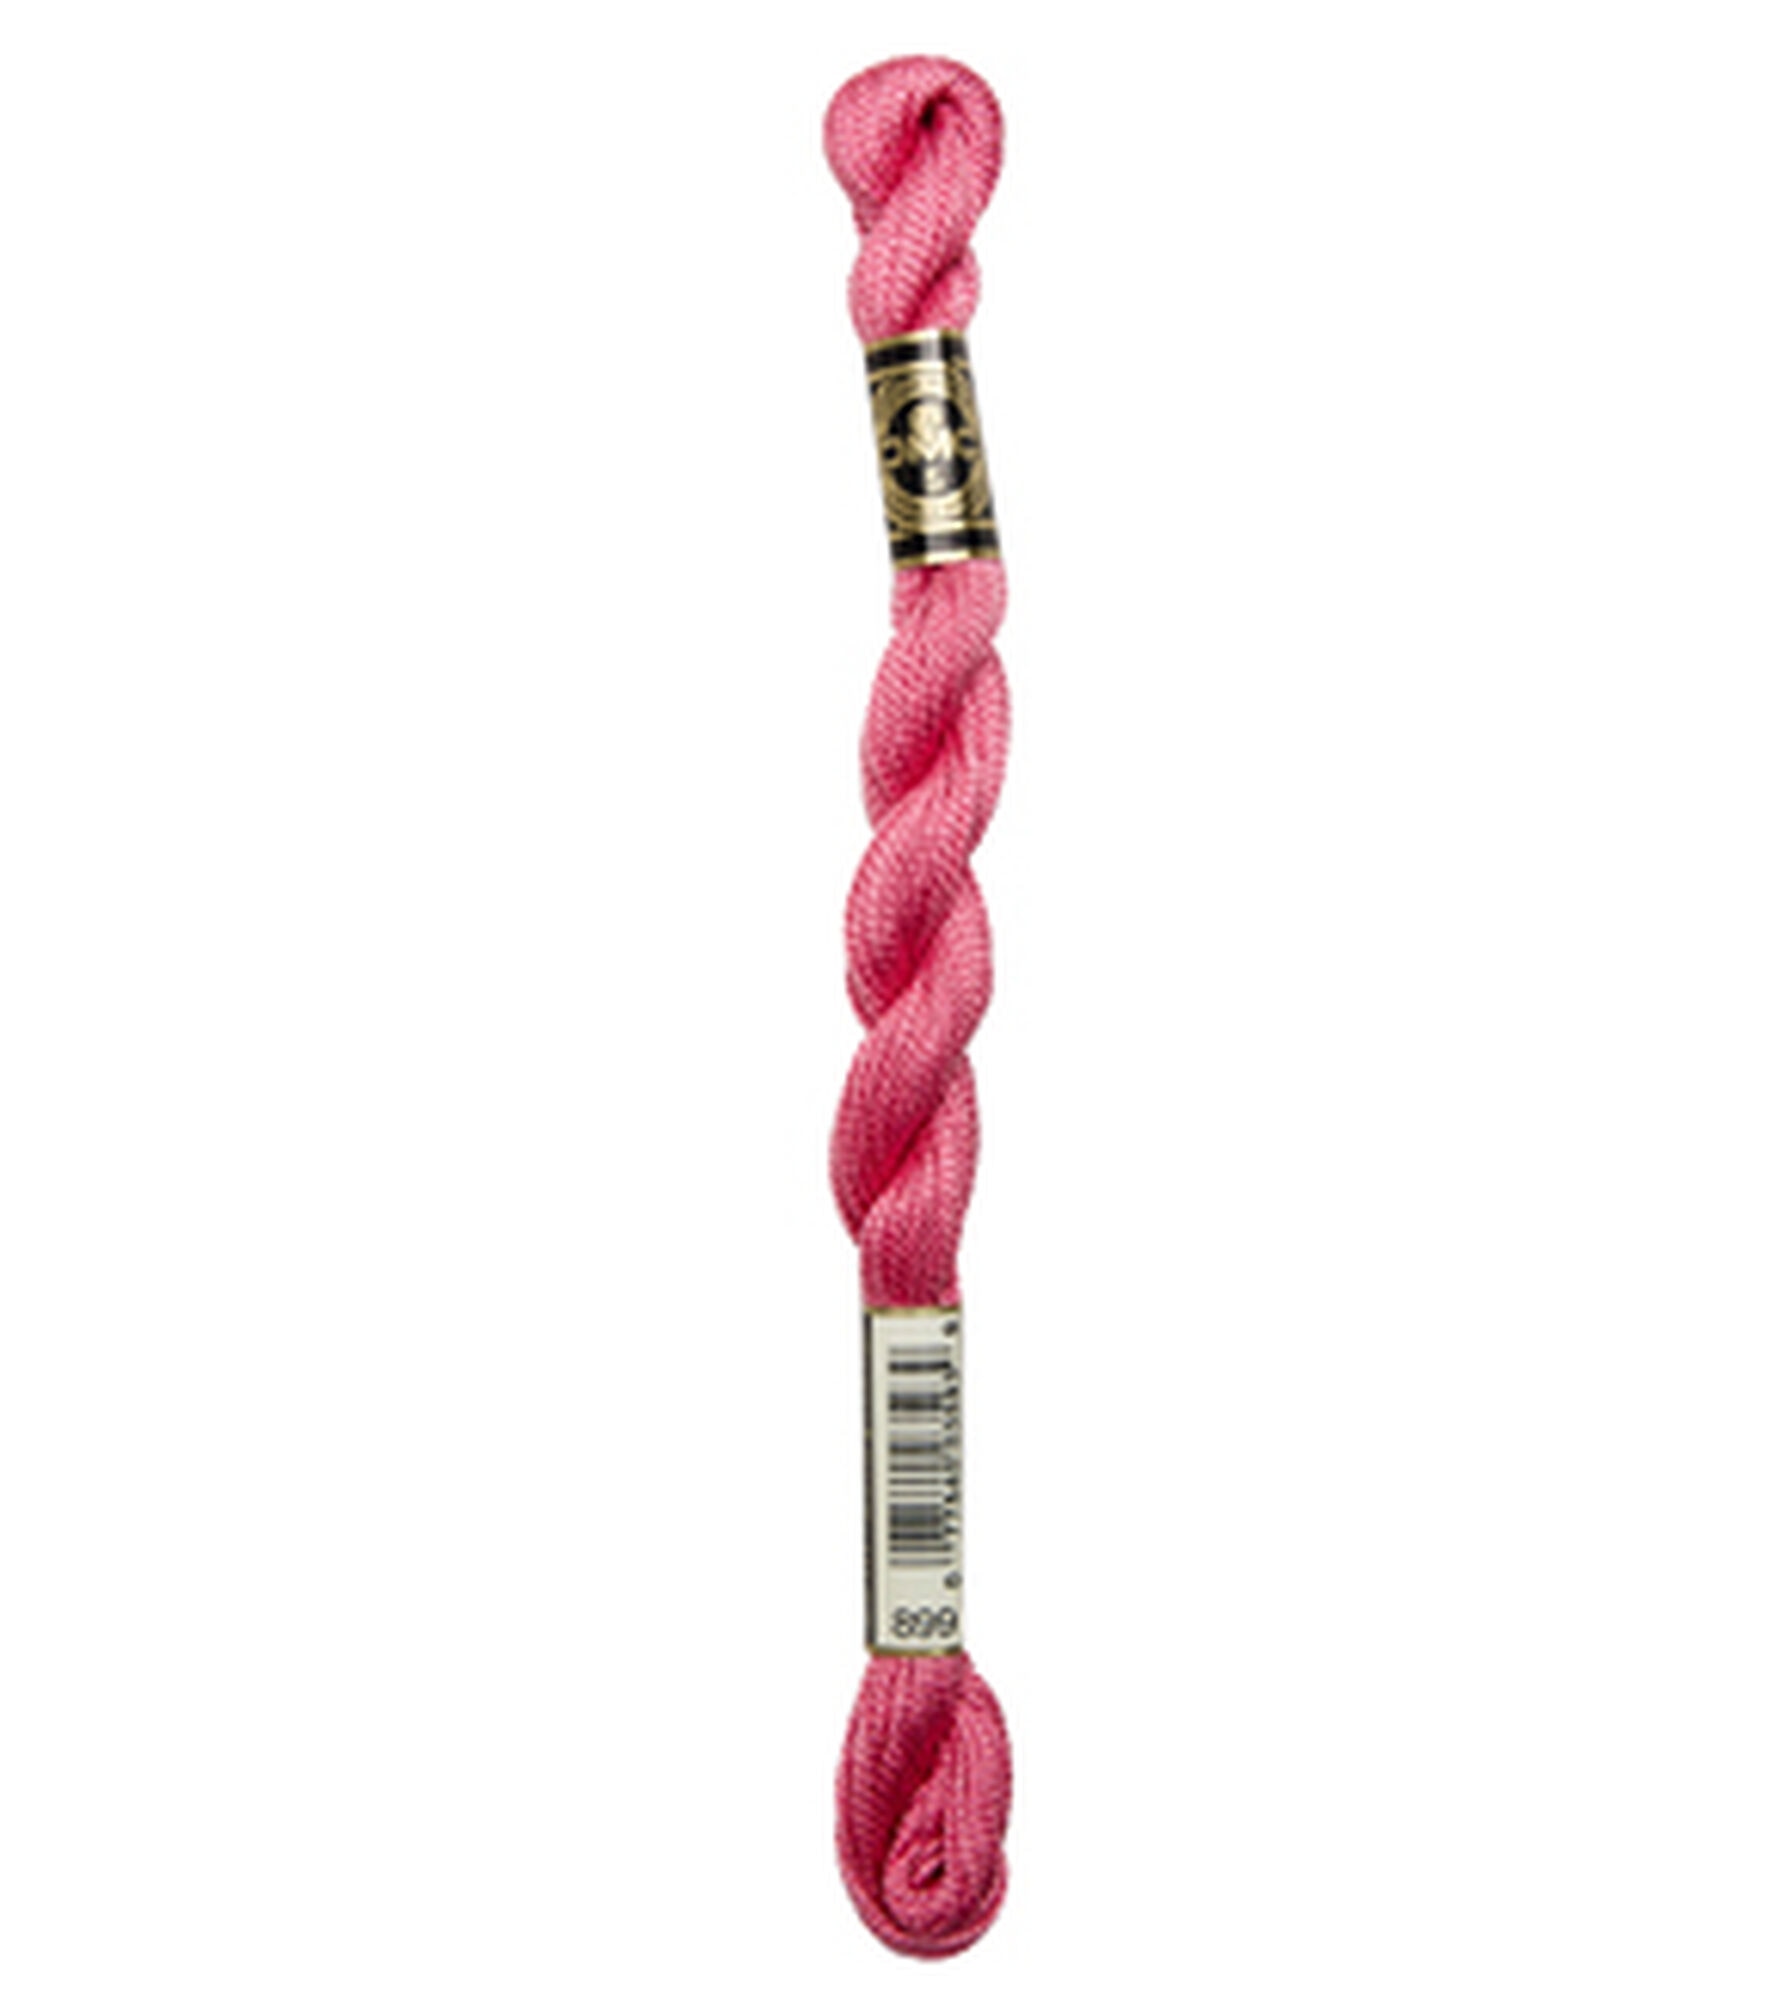 DMC Pearl Cotton Thread 27 Yds Size 5, Medium Rose, hi-res